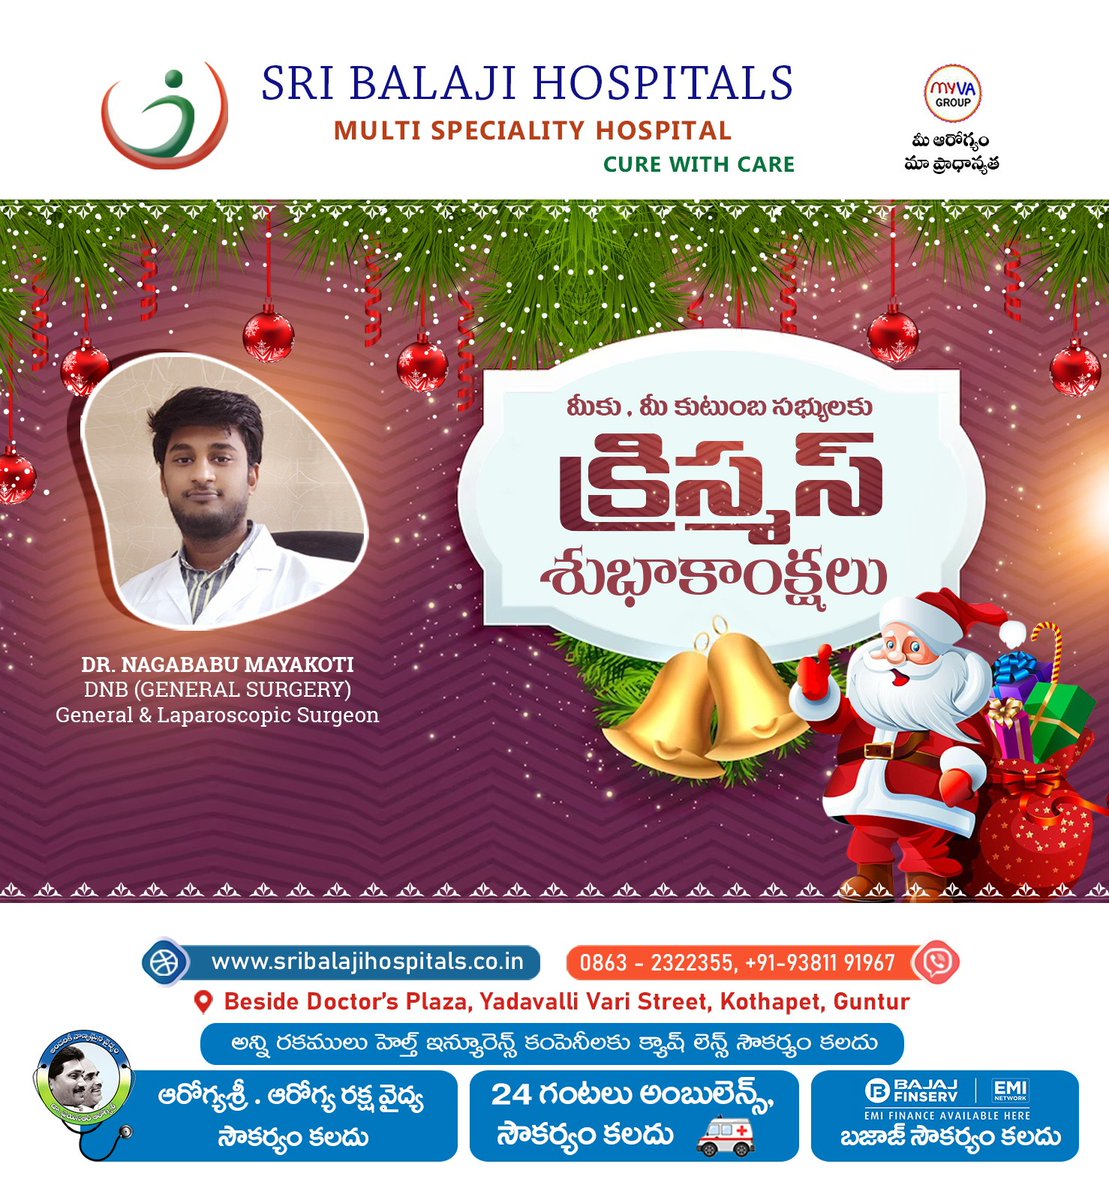 '🎄 Happy Christmas from Dr. Naga Babu Mayakoti, General and Laparoscopic Surgeon at Sri Balaji Hospital! 🏥✨ #FestiveHealth #ChristmasJoy #DrNagaBabuMayakoti #SriBalajiHospital #SeasonsGreetings #HealthForAll'